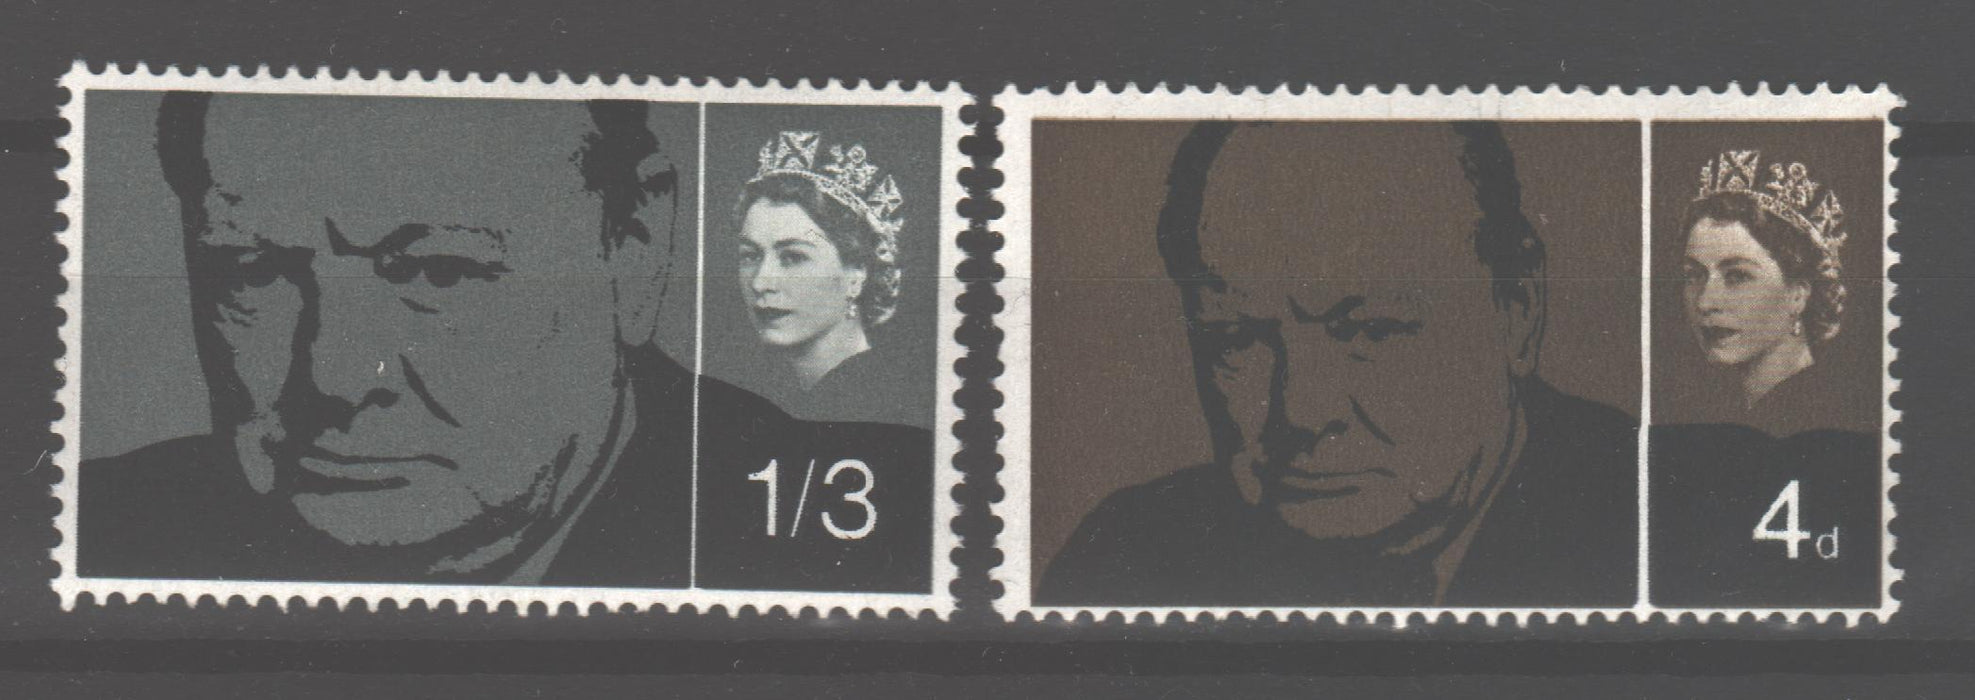 Marea Britanie 1965 Sir Winston Churchill Type Scott #420-421 c.v. 0.60$ - (TIP A) in Stamps Mall